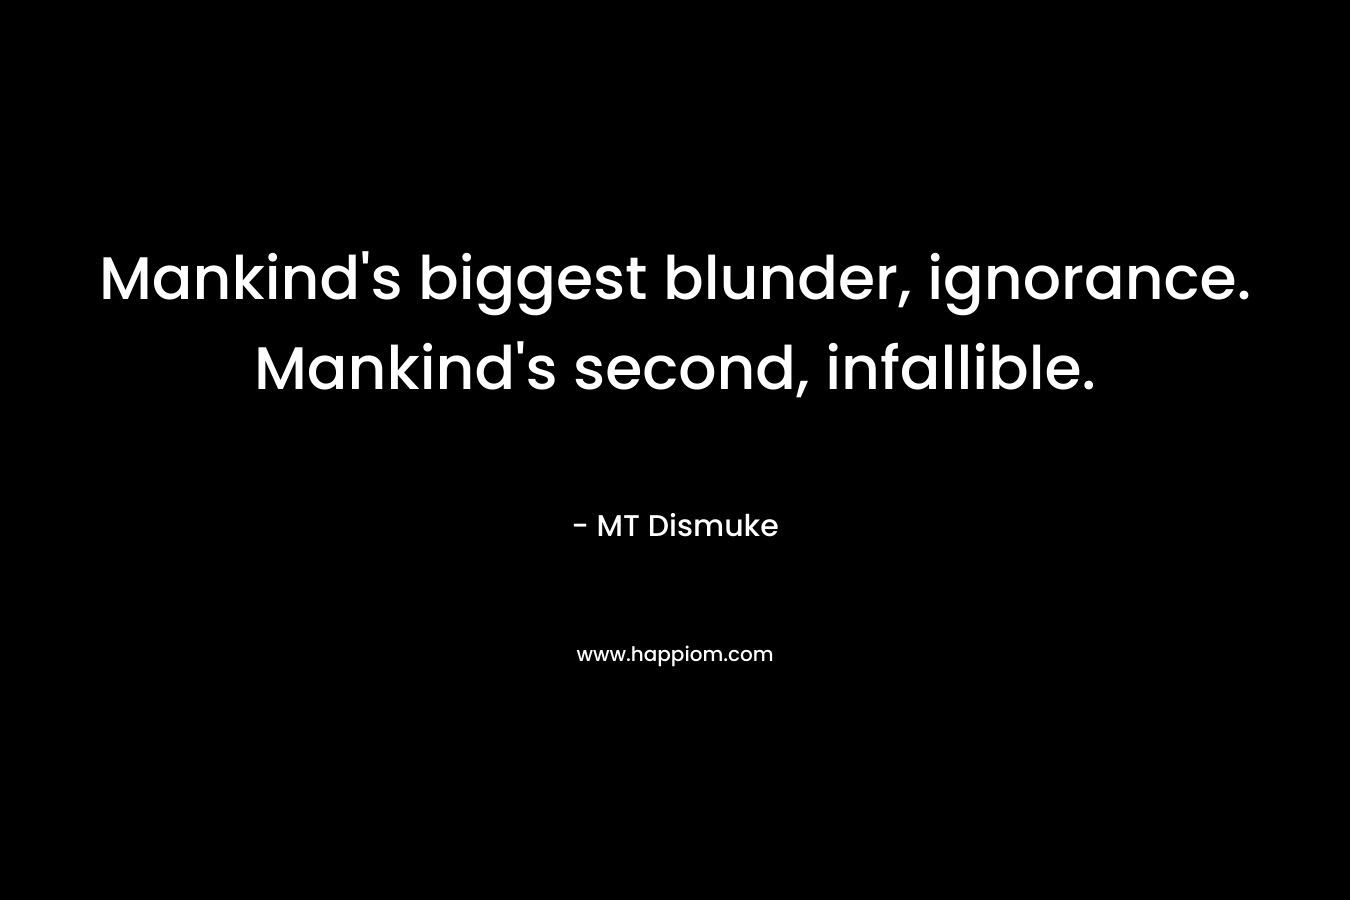 Mankind’s biggest blunder, ignorance. Mankind’s second, infallible. – MT Dismuke